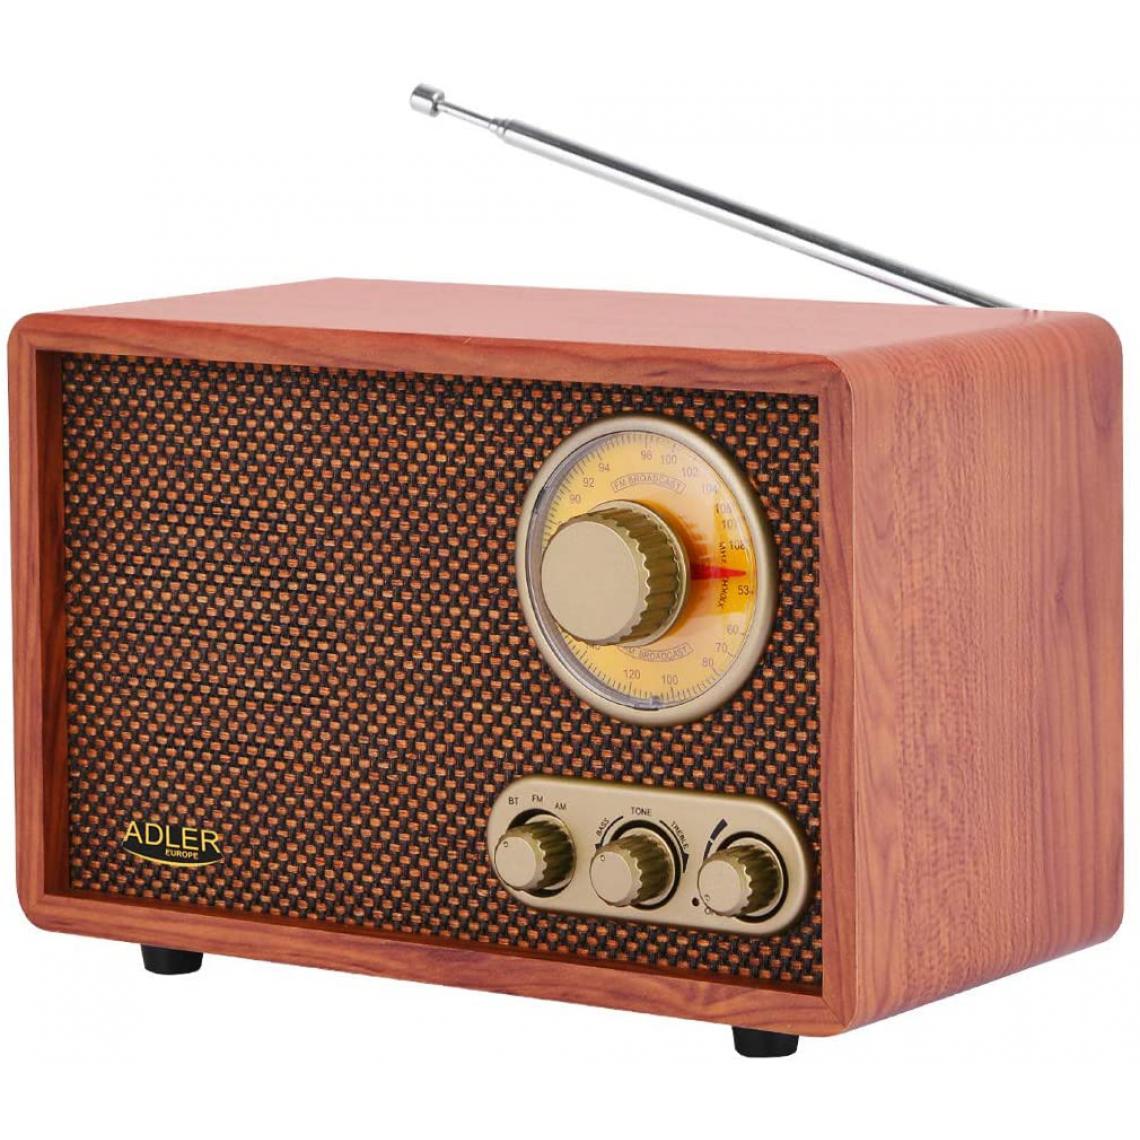 Camry - radio rétro Bluetooth AM/FM marron - Radio